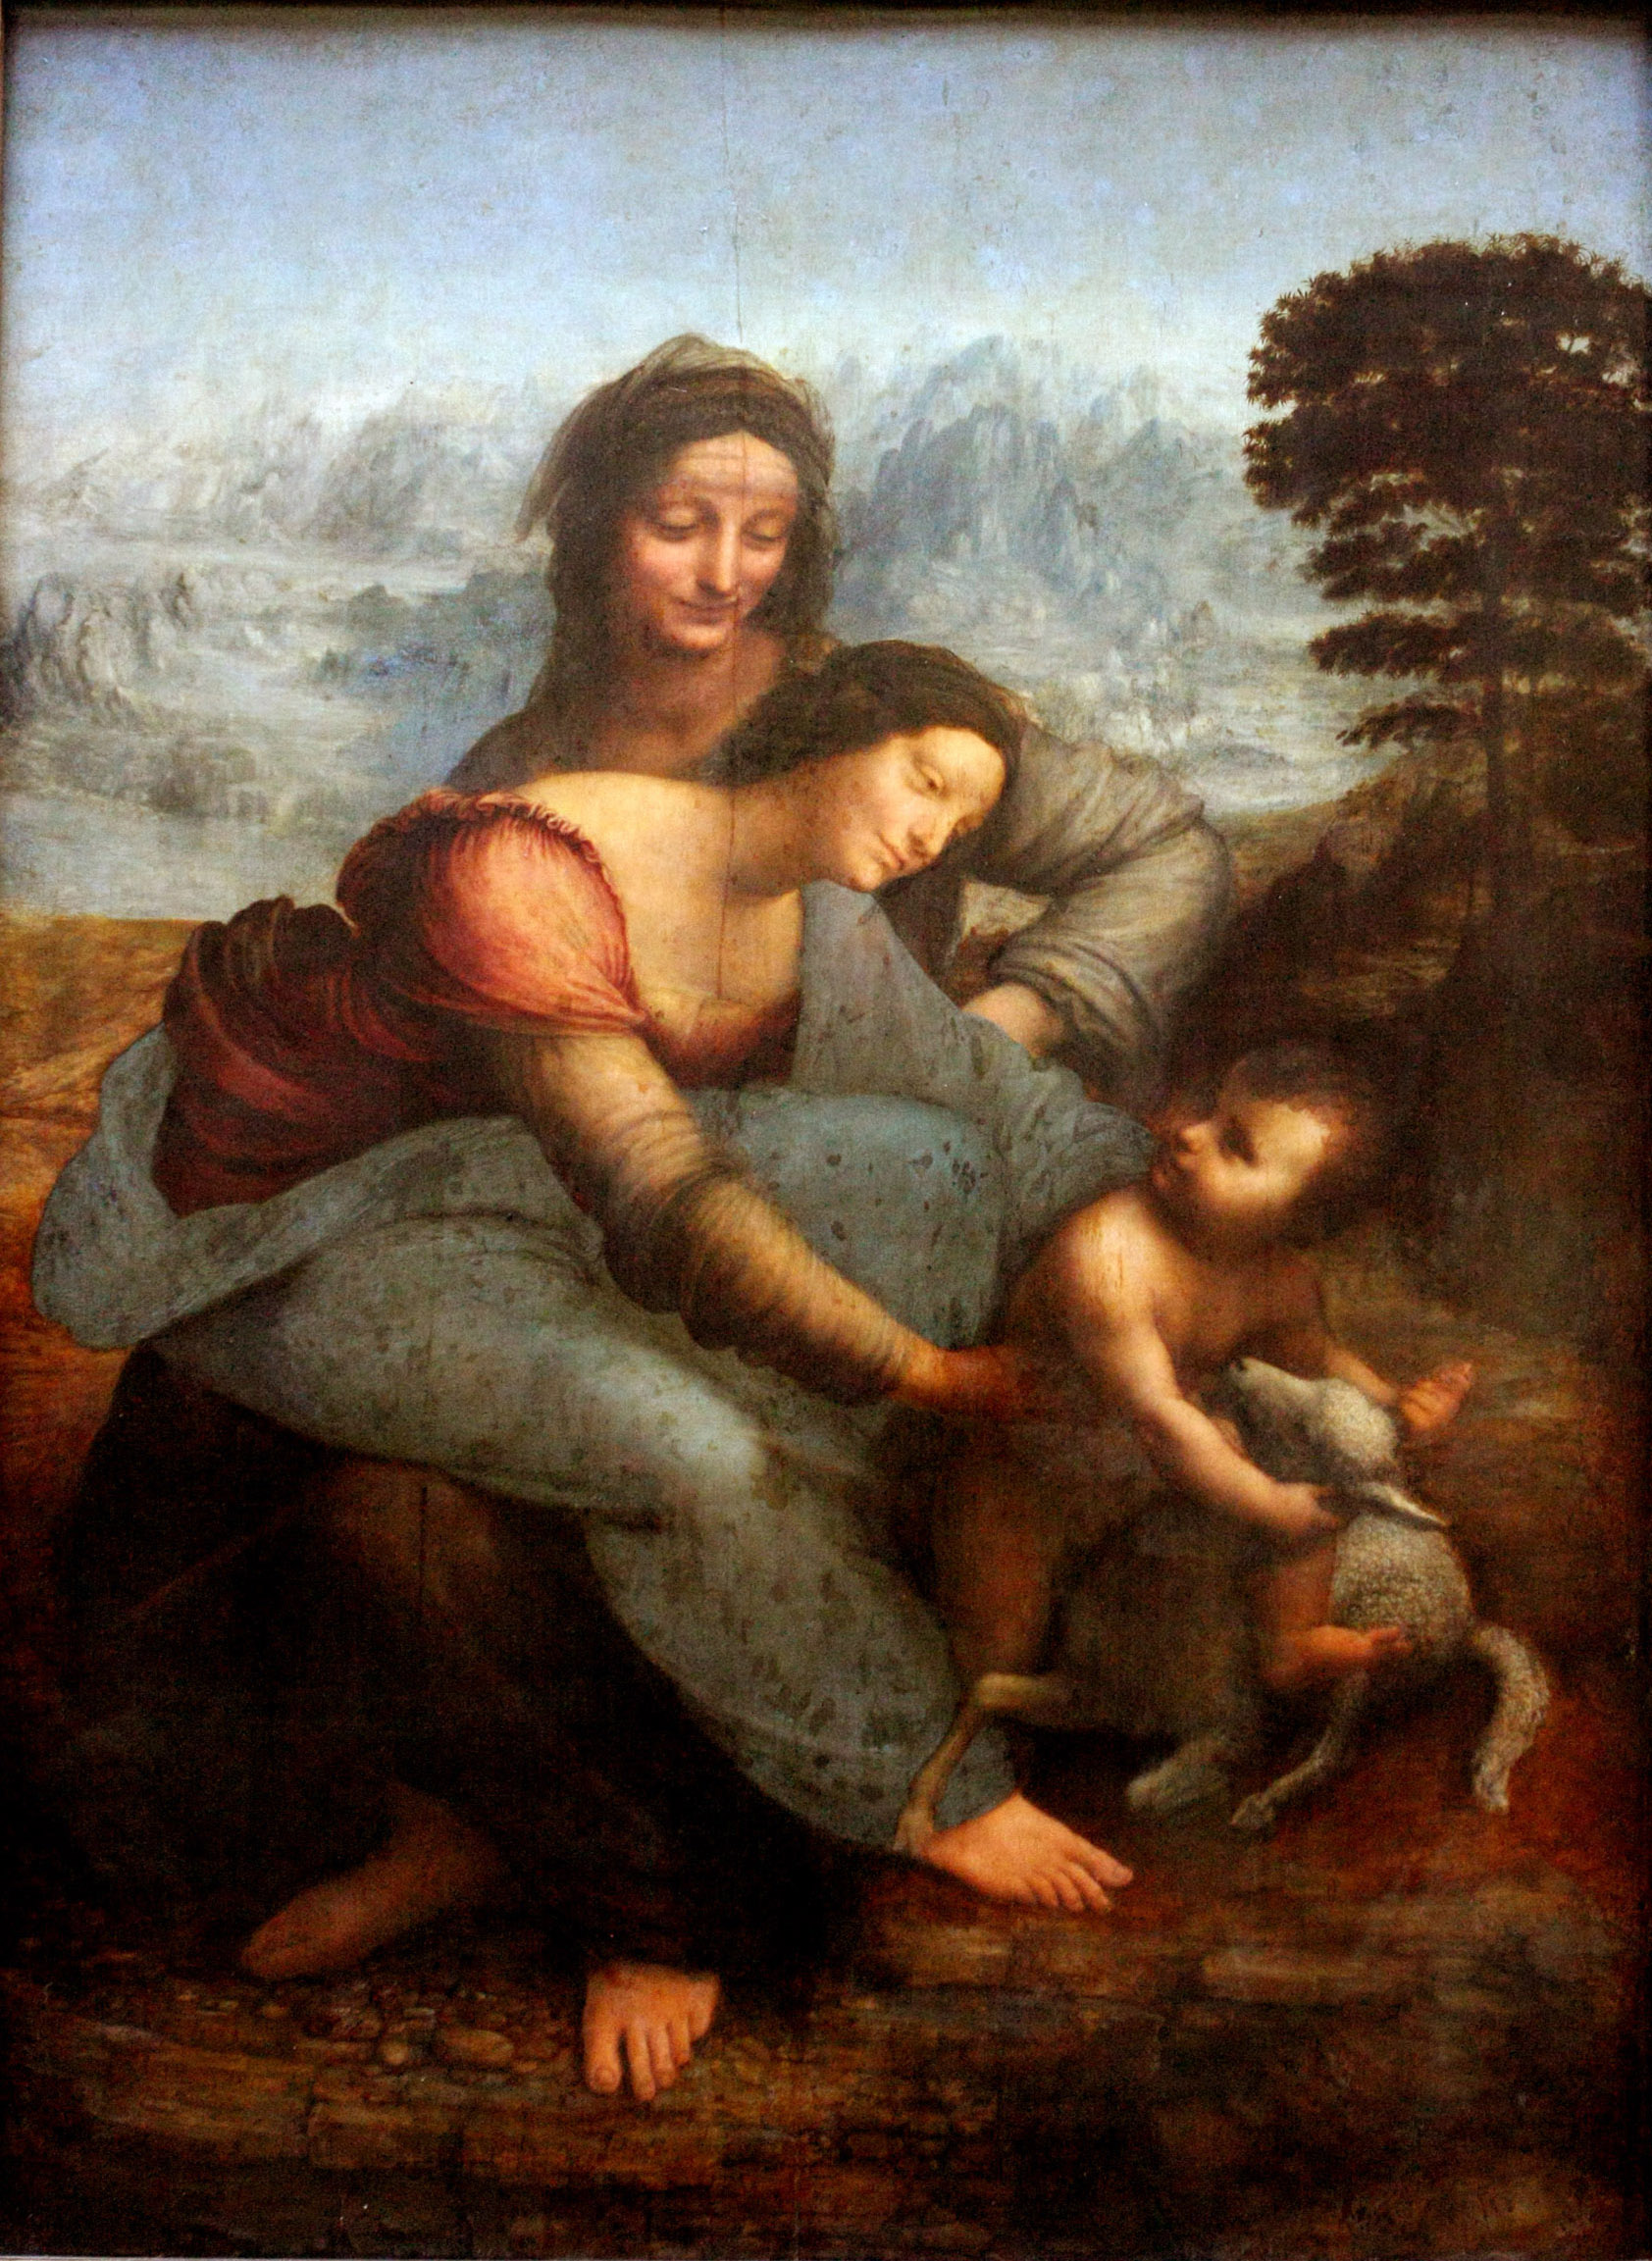 Madonna and child, Leonared De Vinci, 1452-1519
